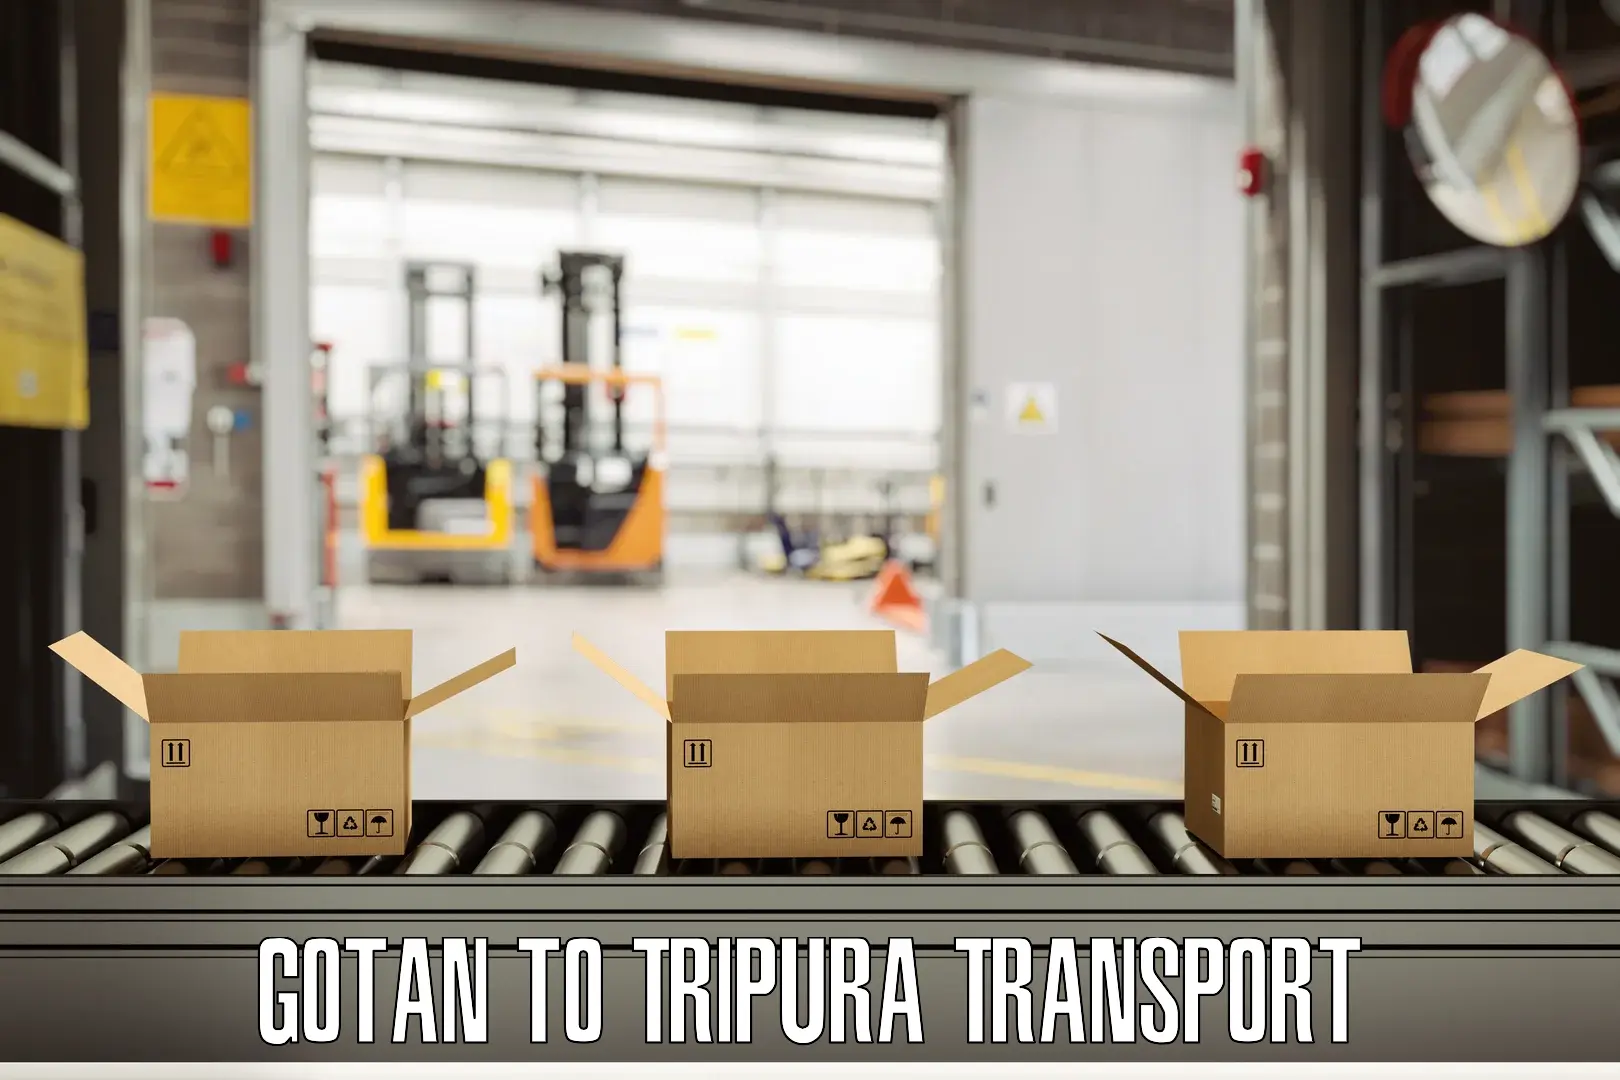 Transport services Gotan to Tripura